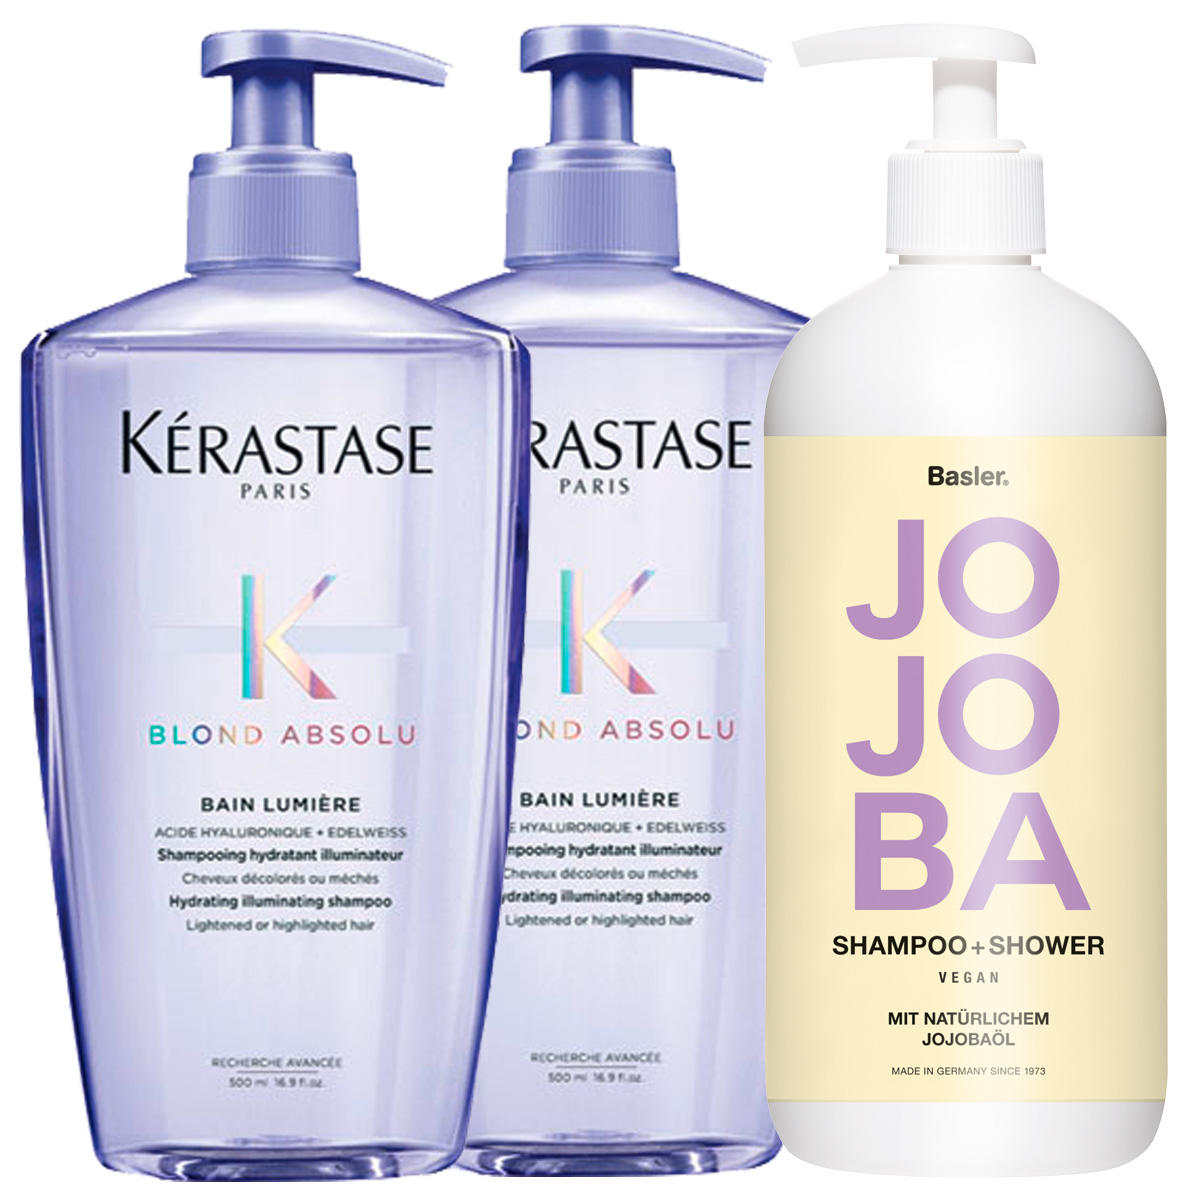 Kérastase Blond Absolu Bain Lumière Bundle 2 x 500 ml + Basler Jojoba Shampoo & Shower 500 ml gratuit - 1